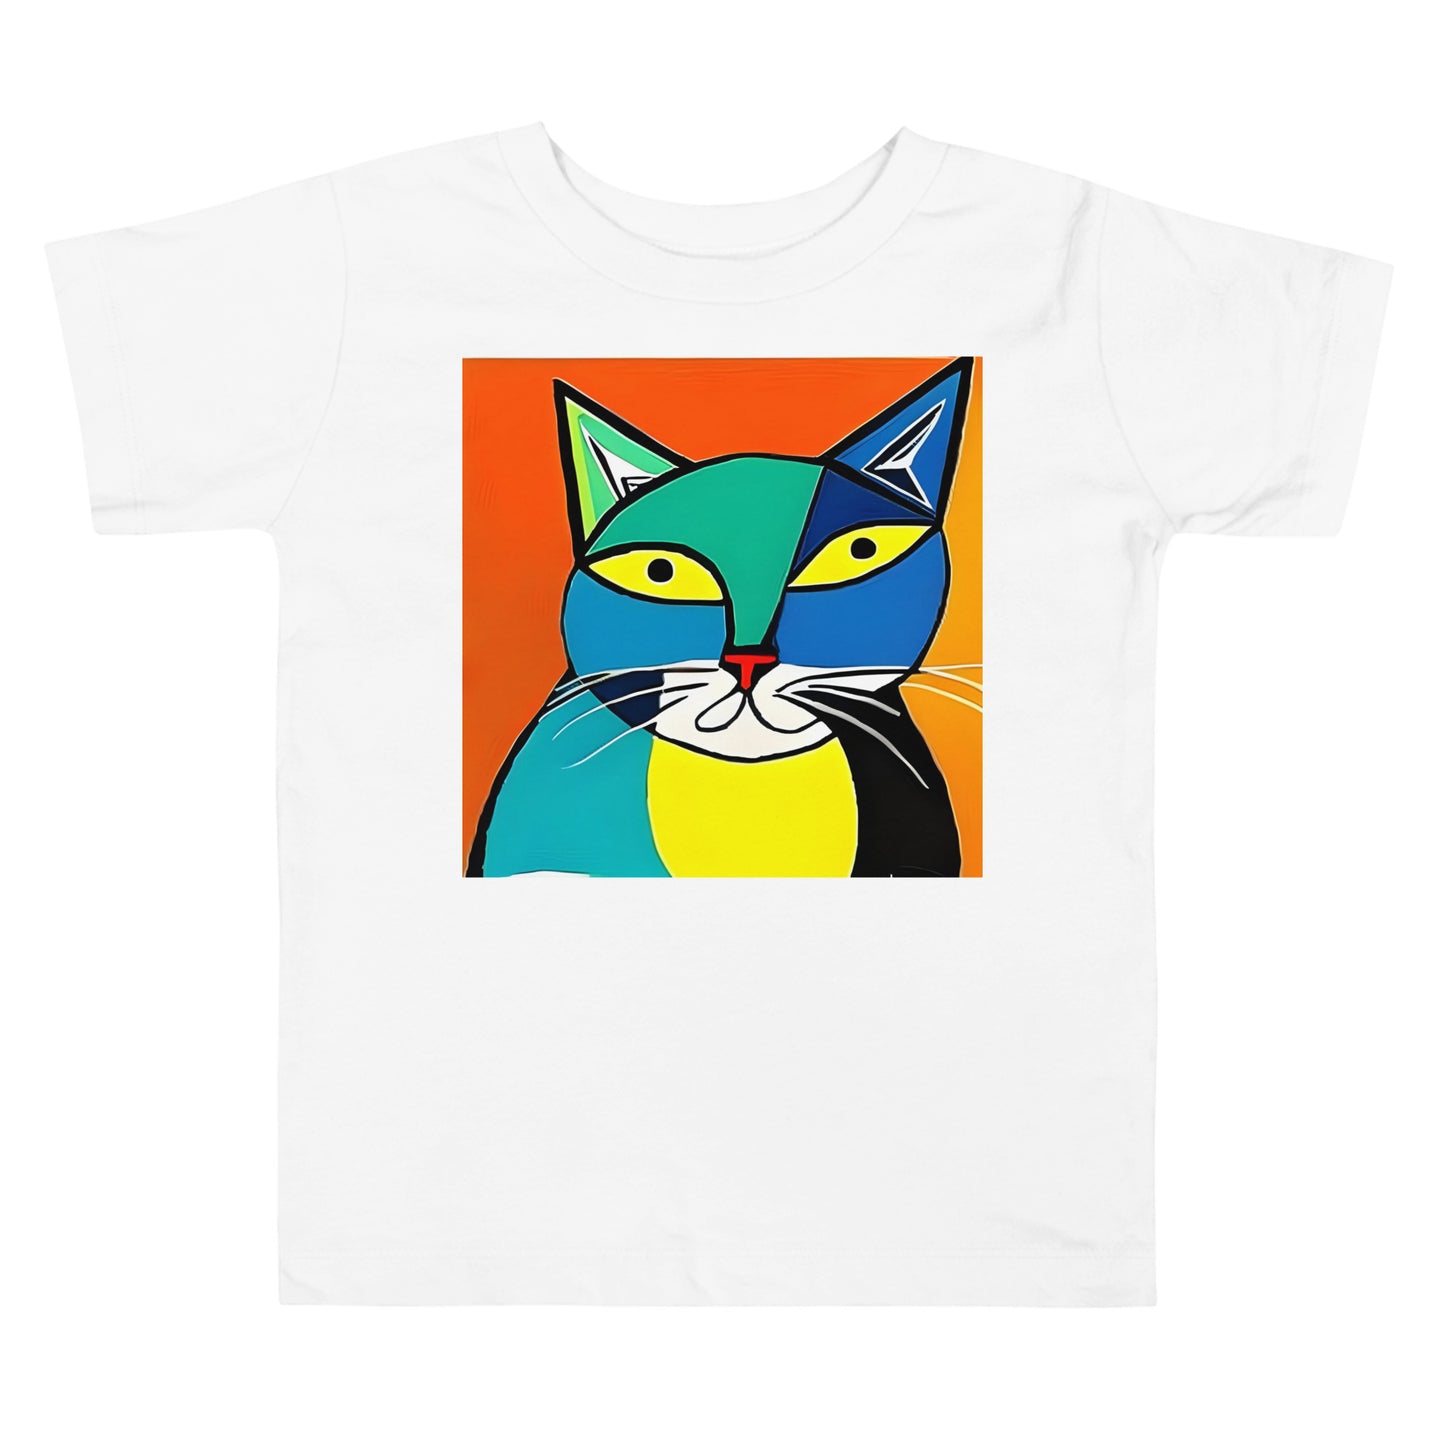 Purrfect Toddler's T-Shirt - 001